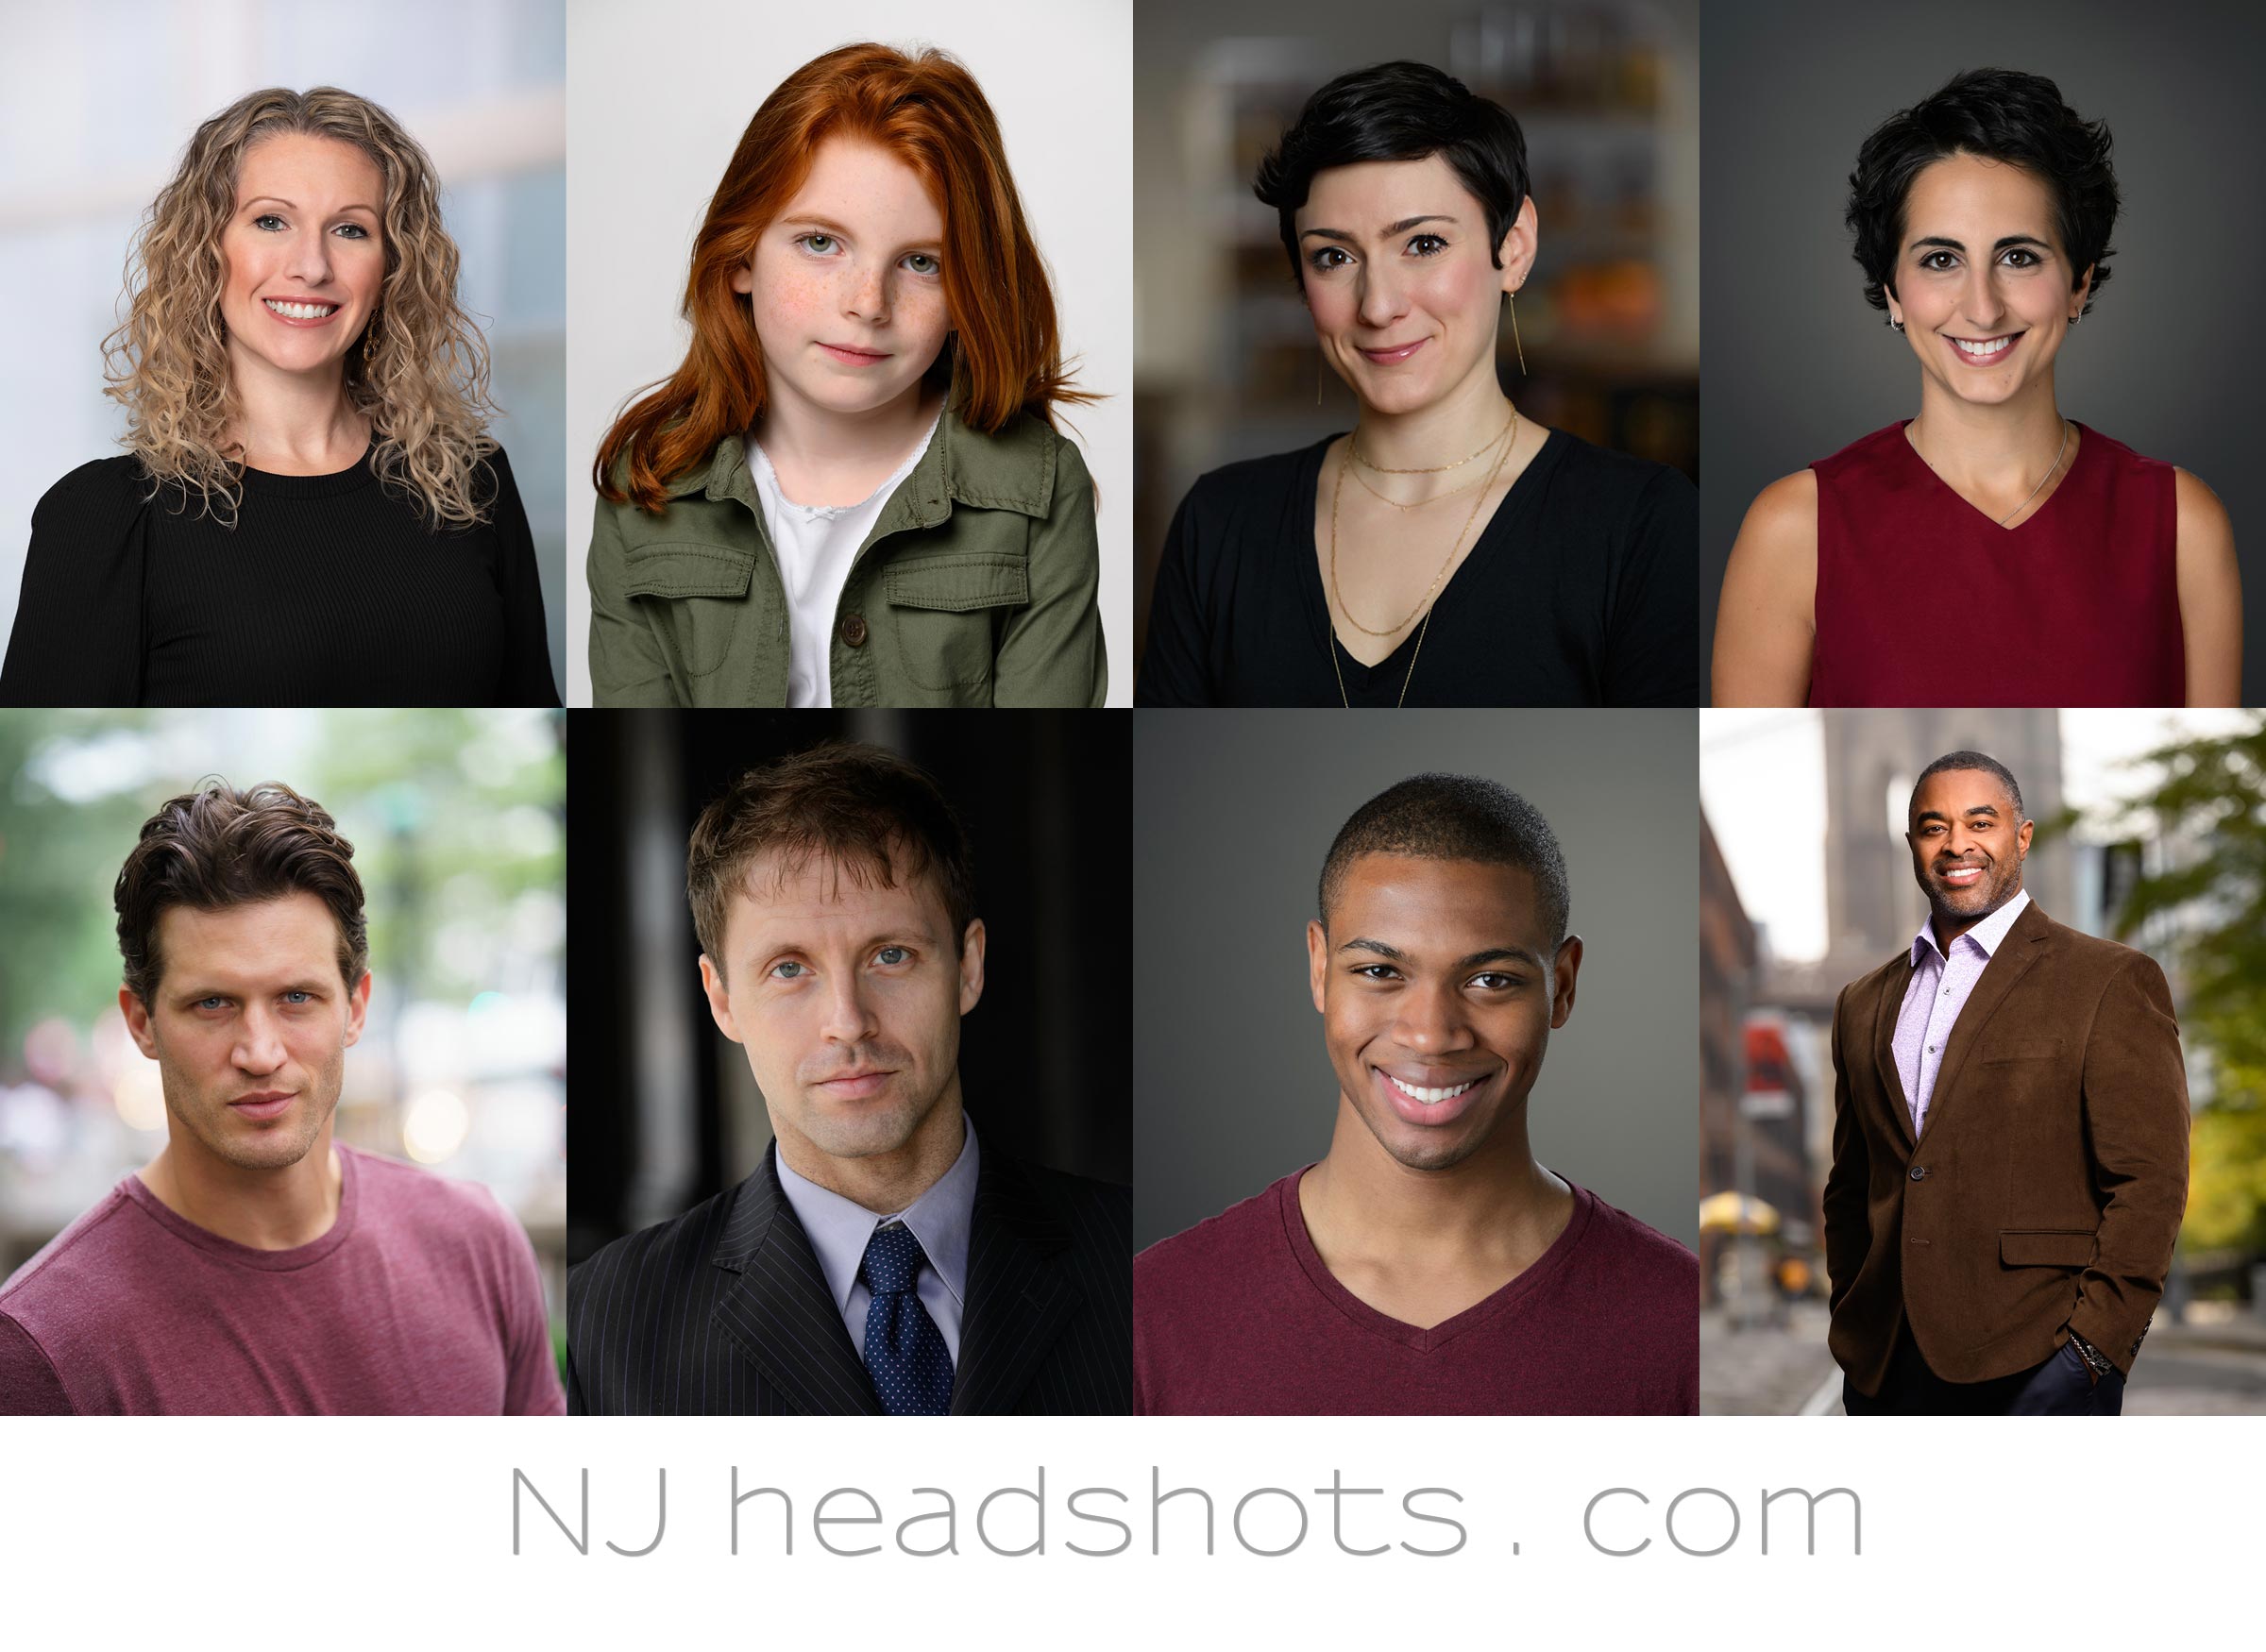 NJ headshot photographer testimonials